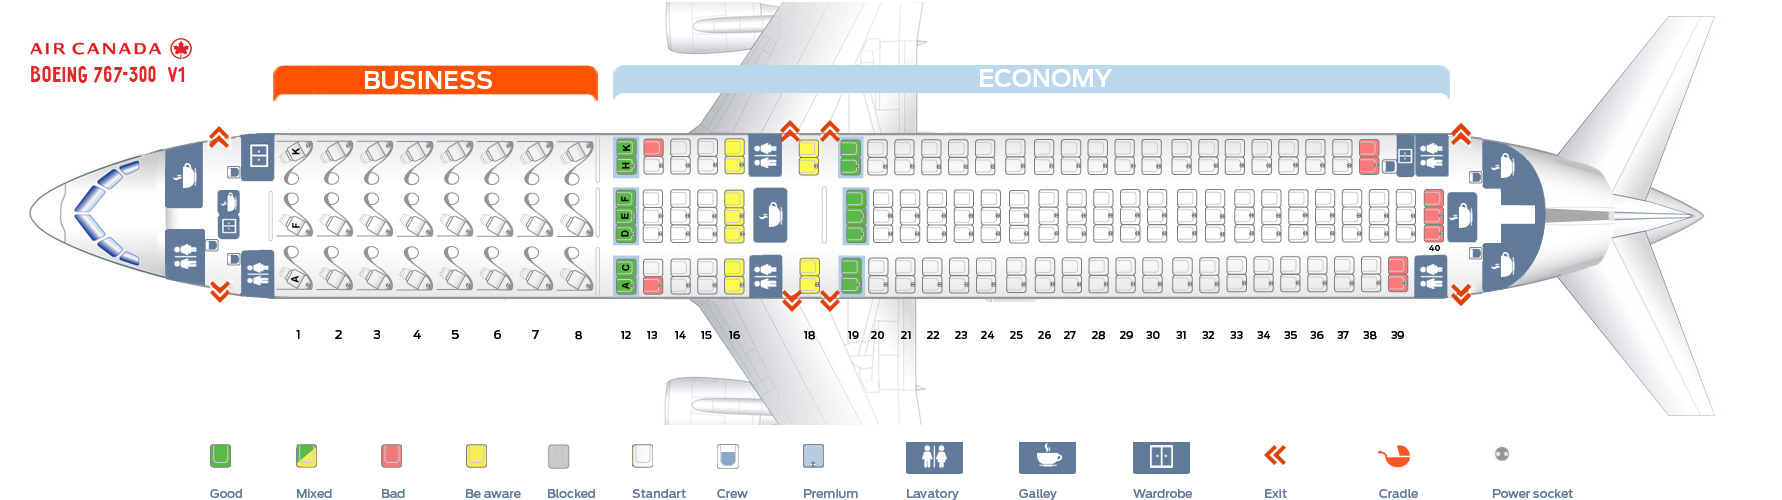 Boeing 767 Passenger Jet Seating Chart